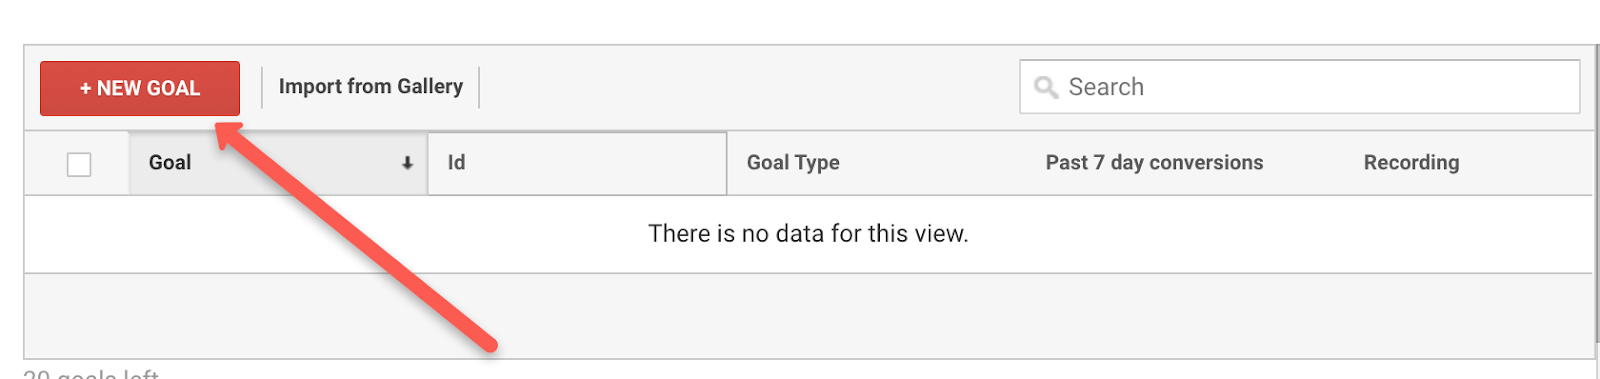 Google Analytics new goal